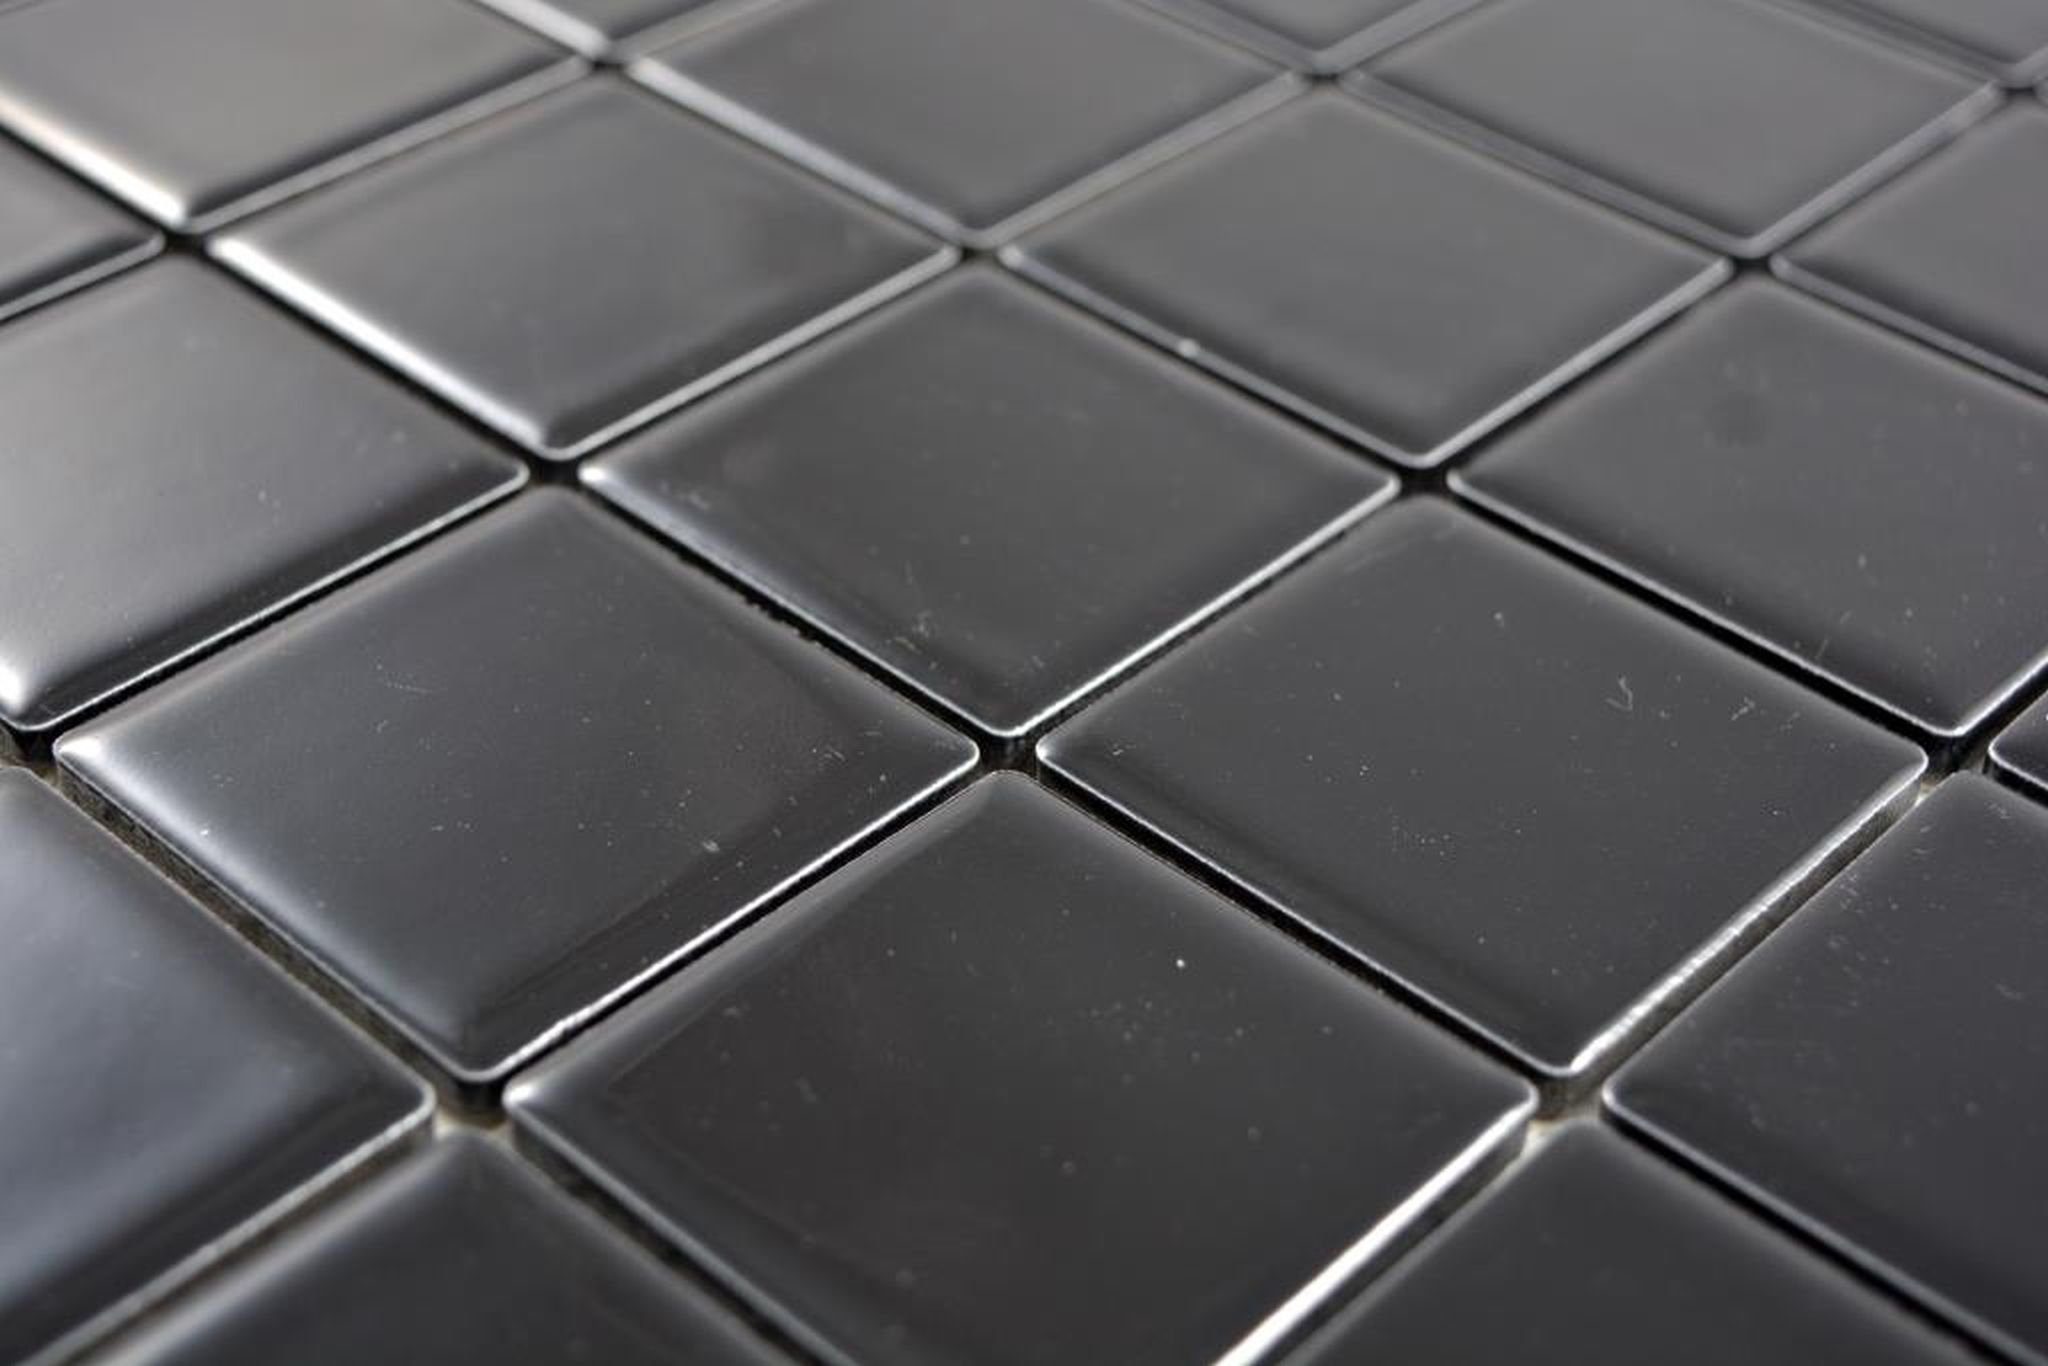 Mosani Mosaikfliesen Fliese schwarz Küchenrückwand Keramik Mosaik hochglanz